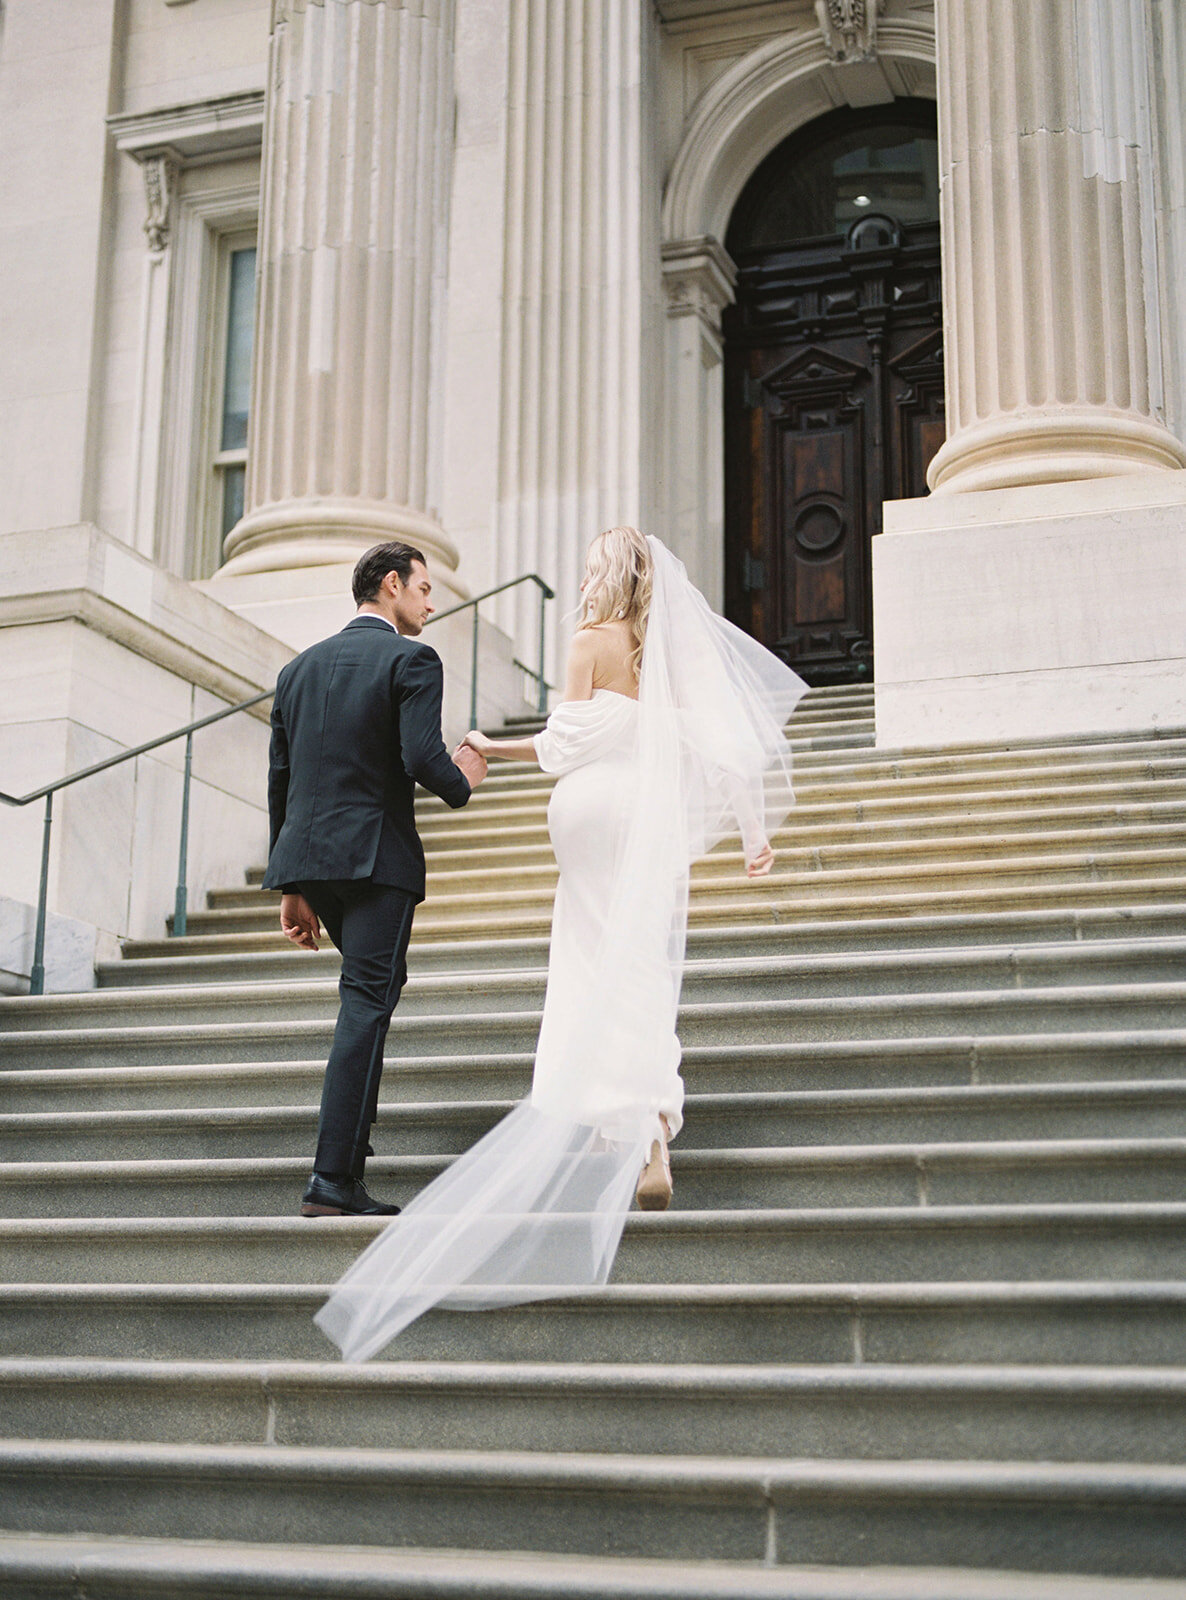 The Plaza Hotel - New York City - Elopement Wedding - Stephanie Michelle Photography - _stephaniemichellephotog - 0-R1-E007